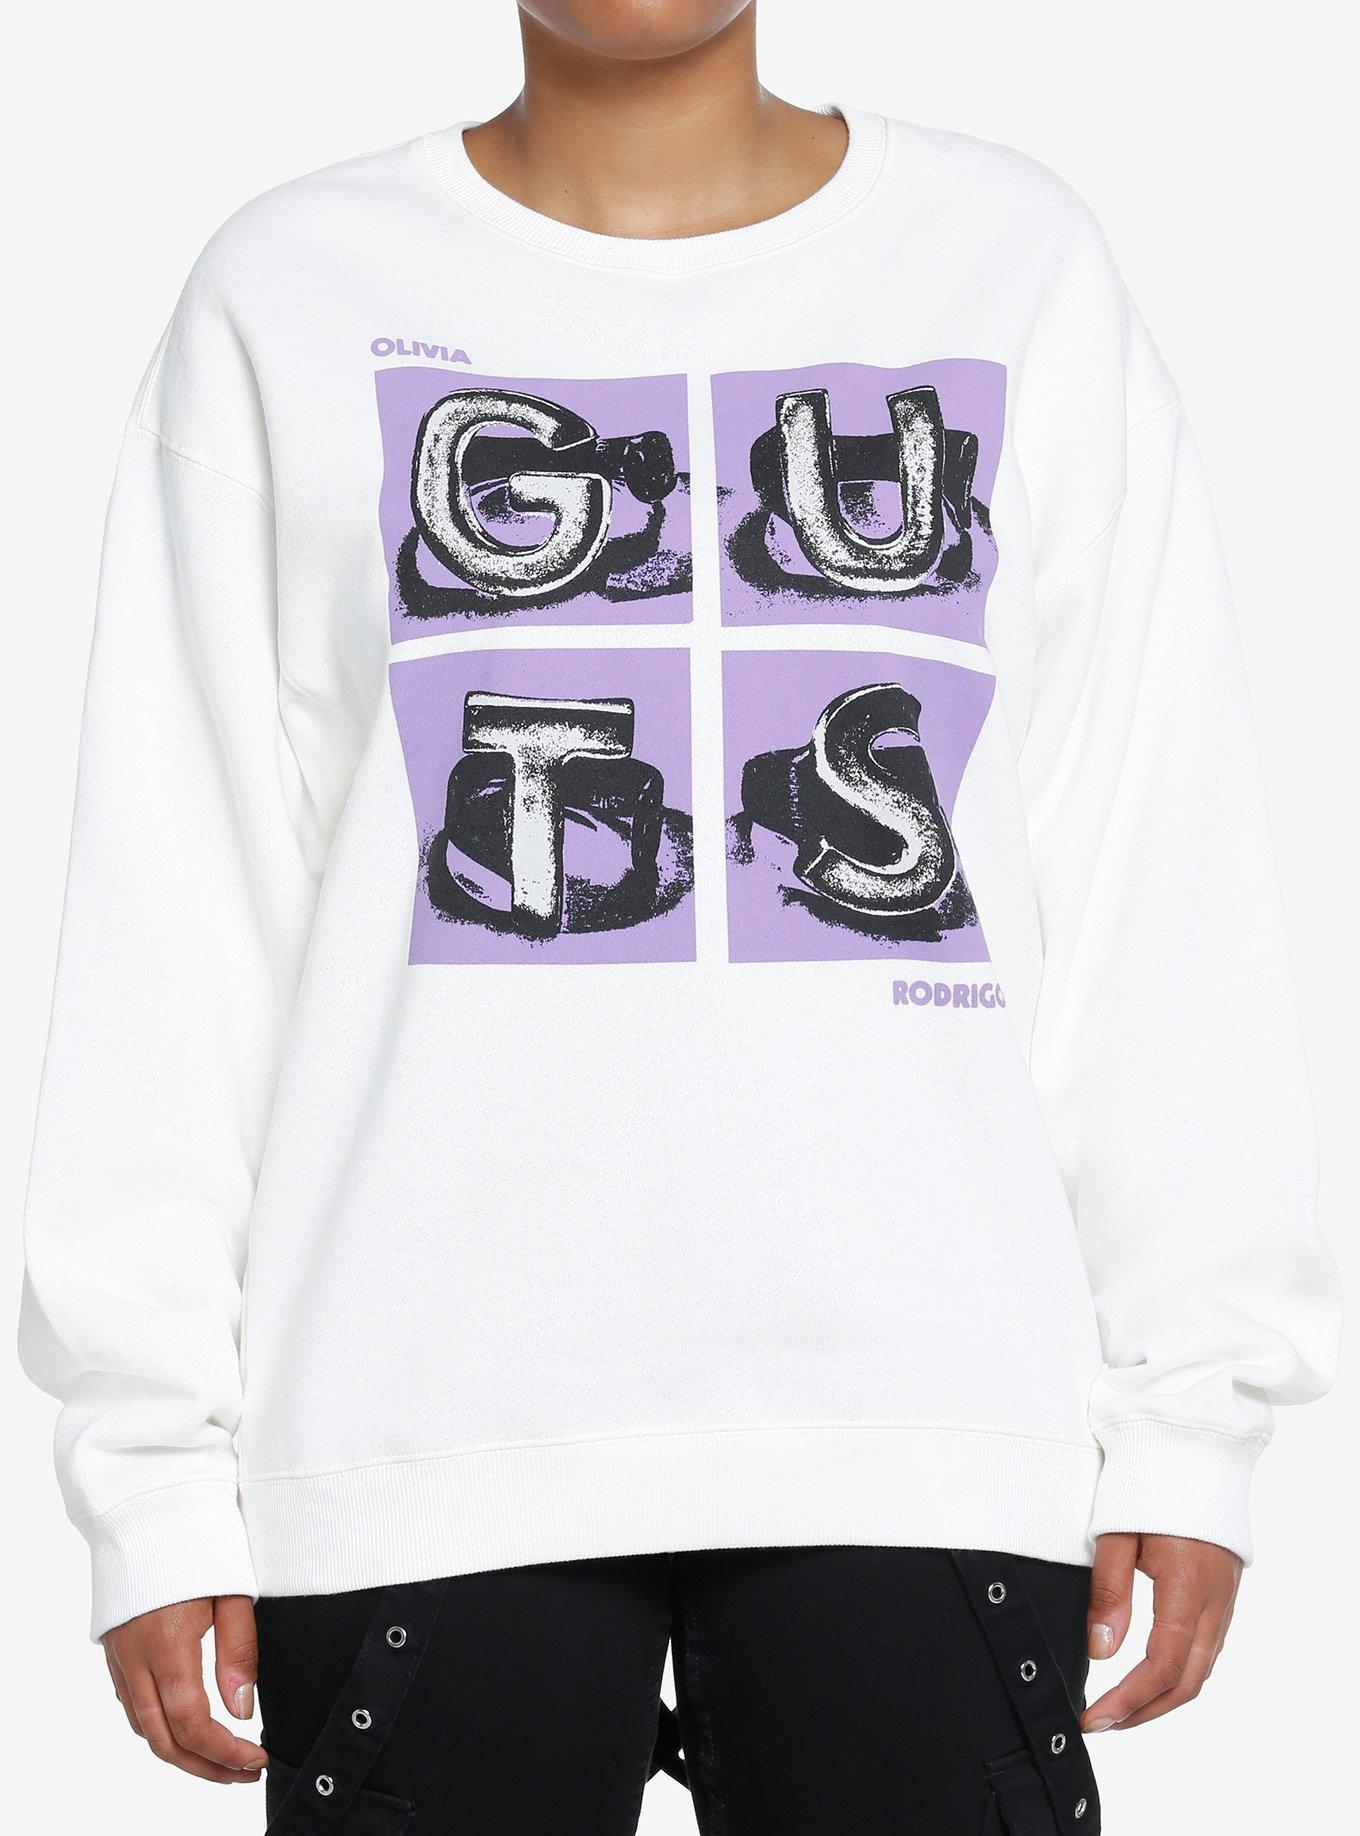 Vampire Olivia Rodrigo Shirt GUTS Album Preorder Merch Sweatshirt